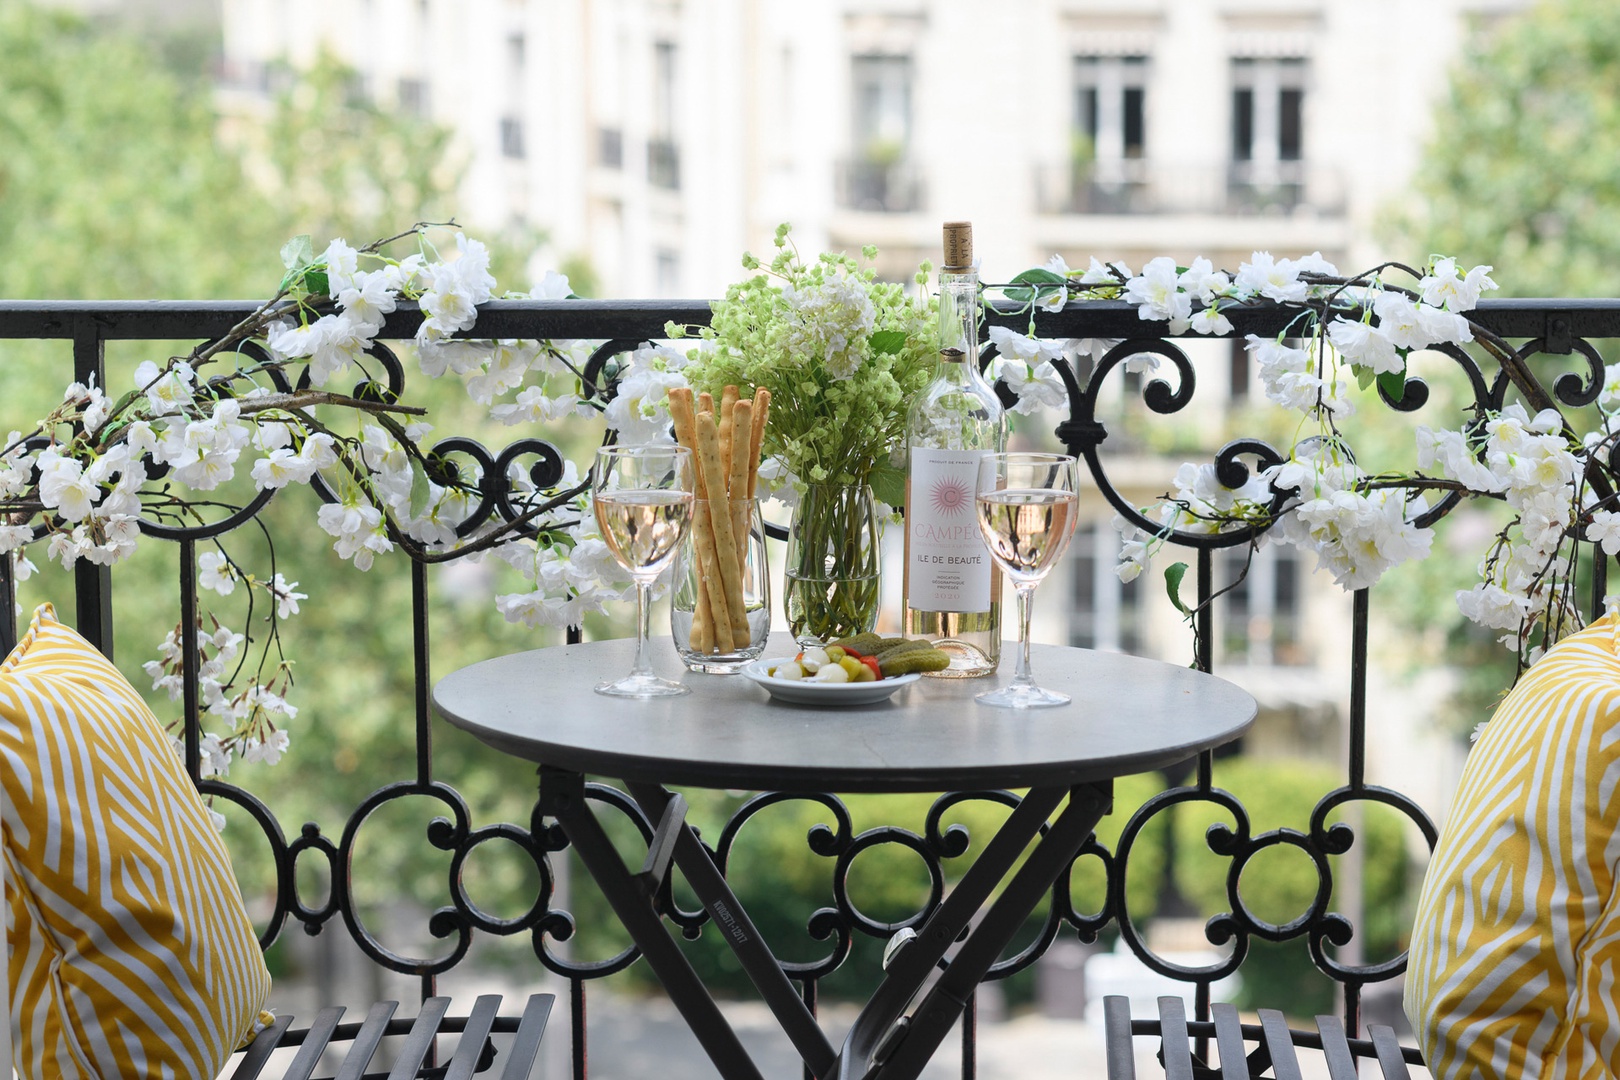 Enjoy apéro on the sunny wraparound balcony.